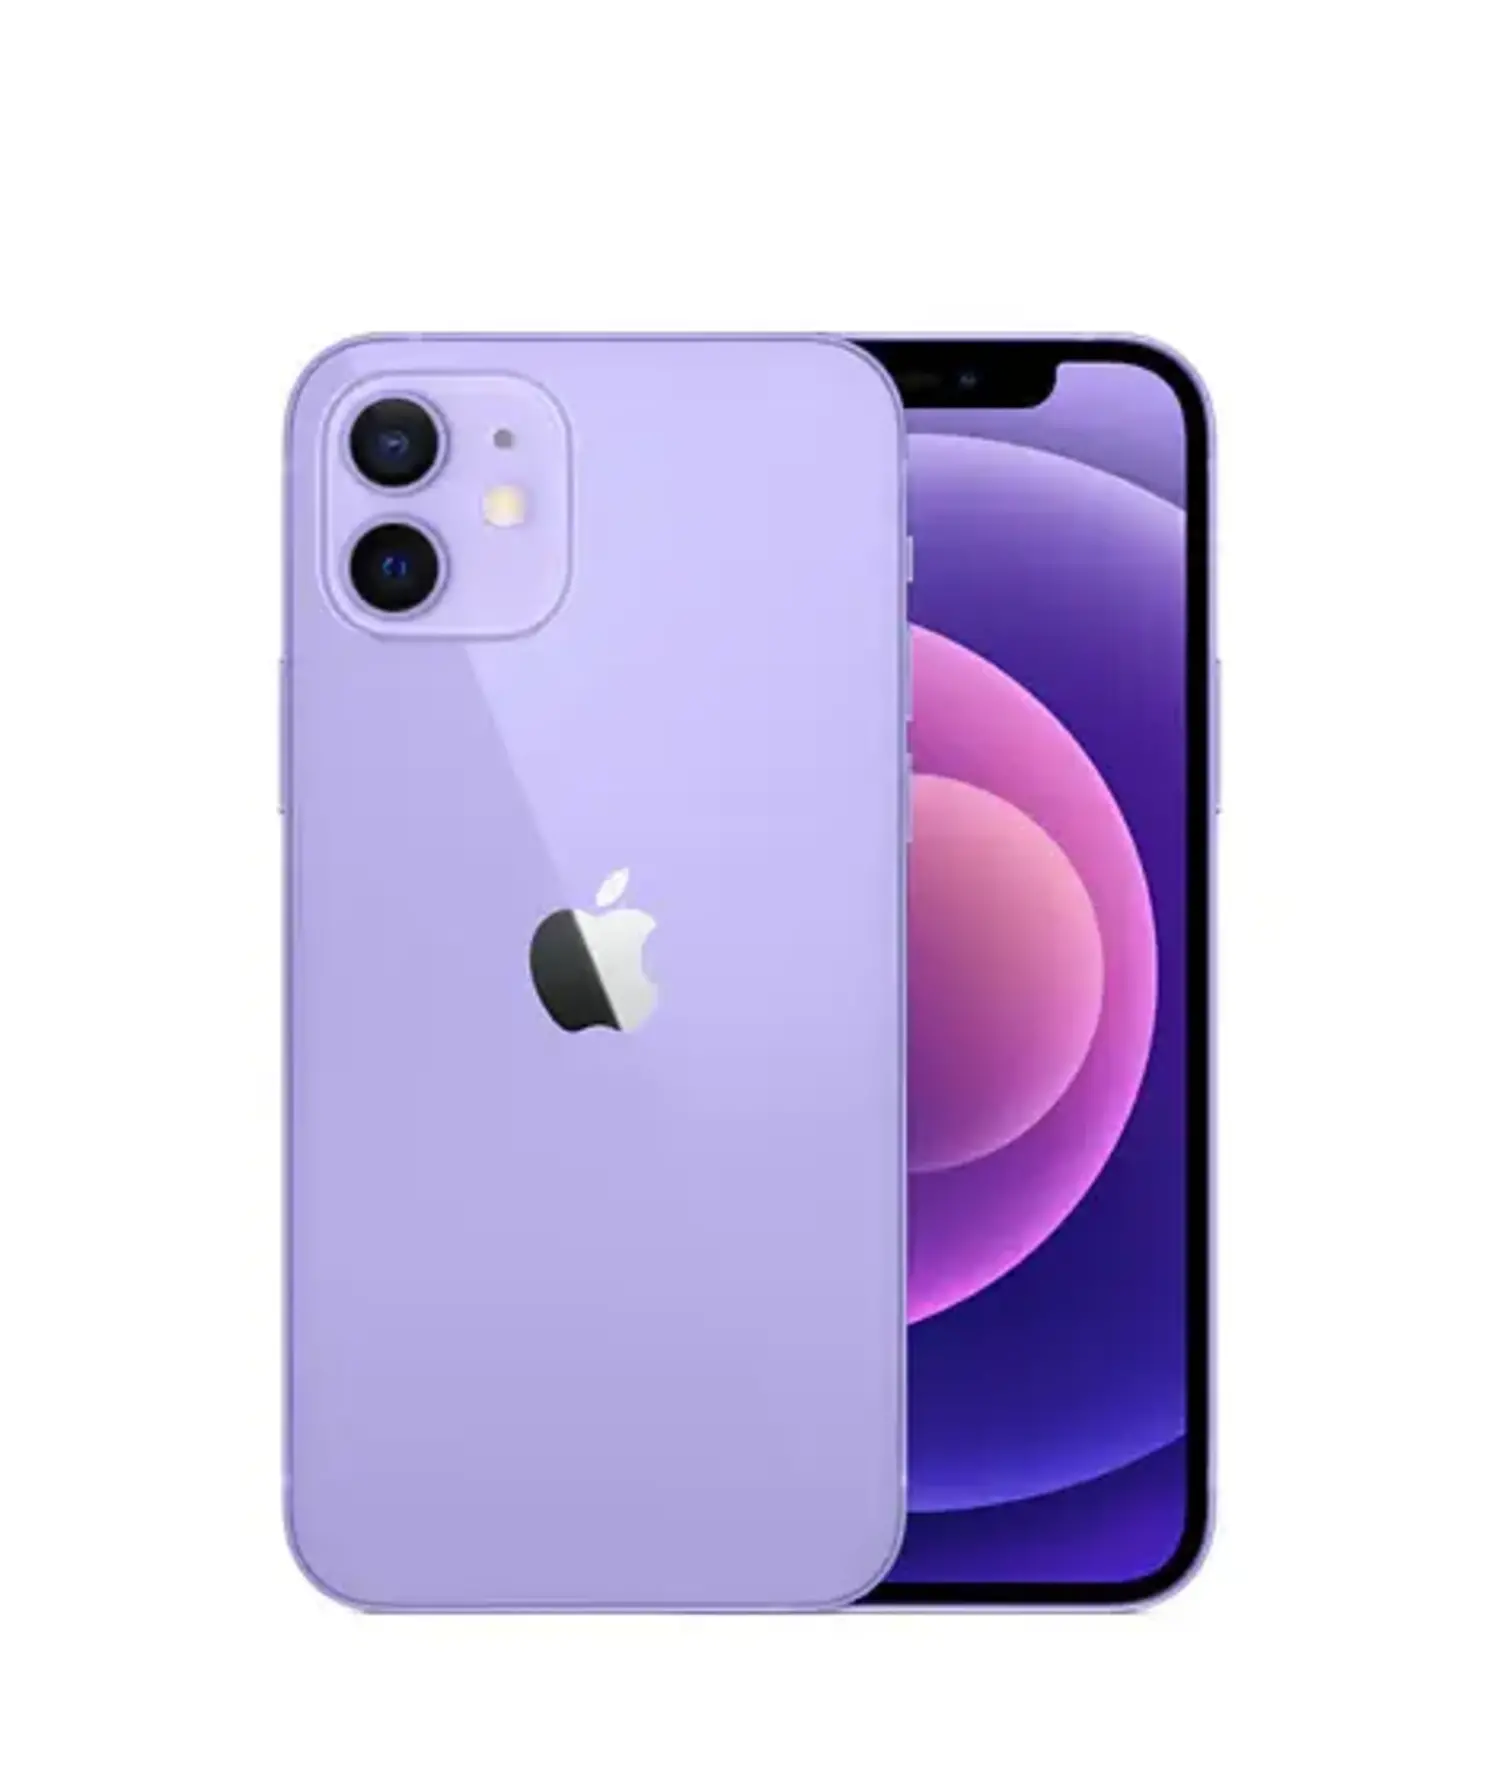 Apple iPhone 12 64GB Purple REFURBISHED